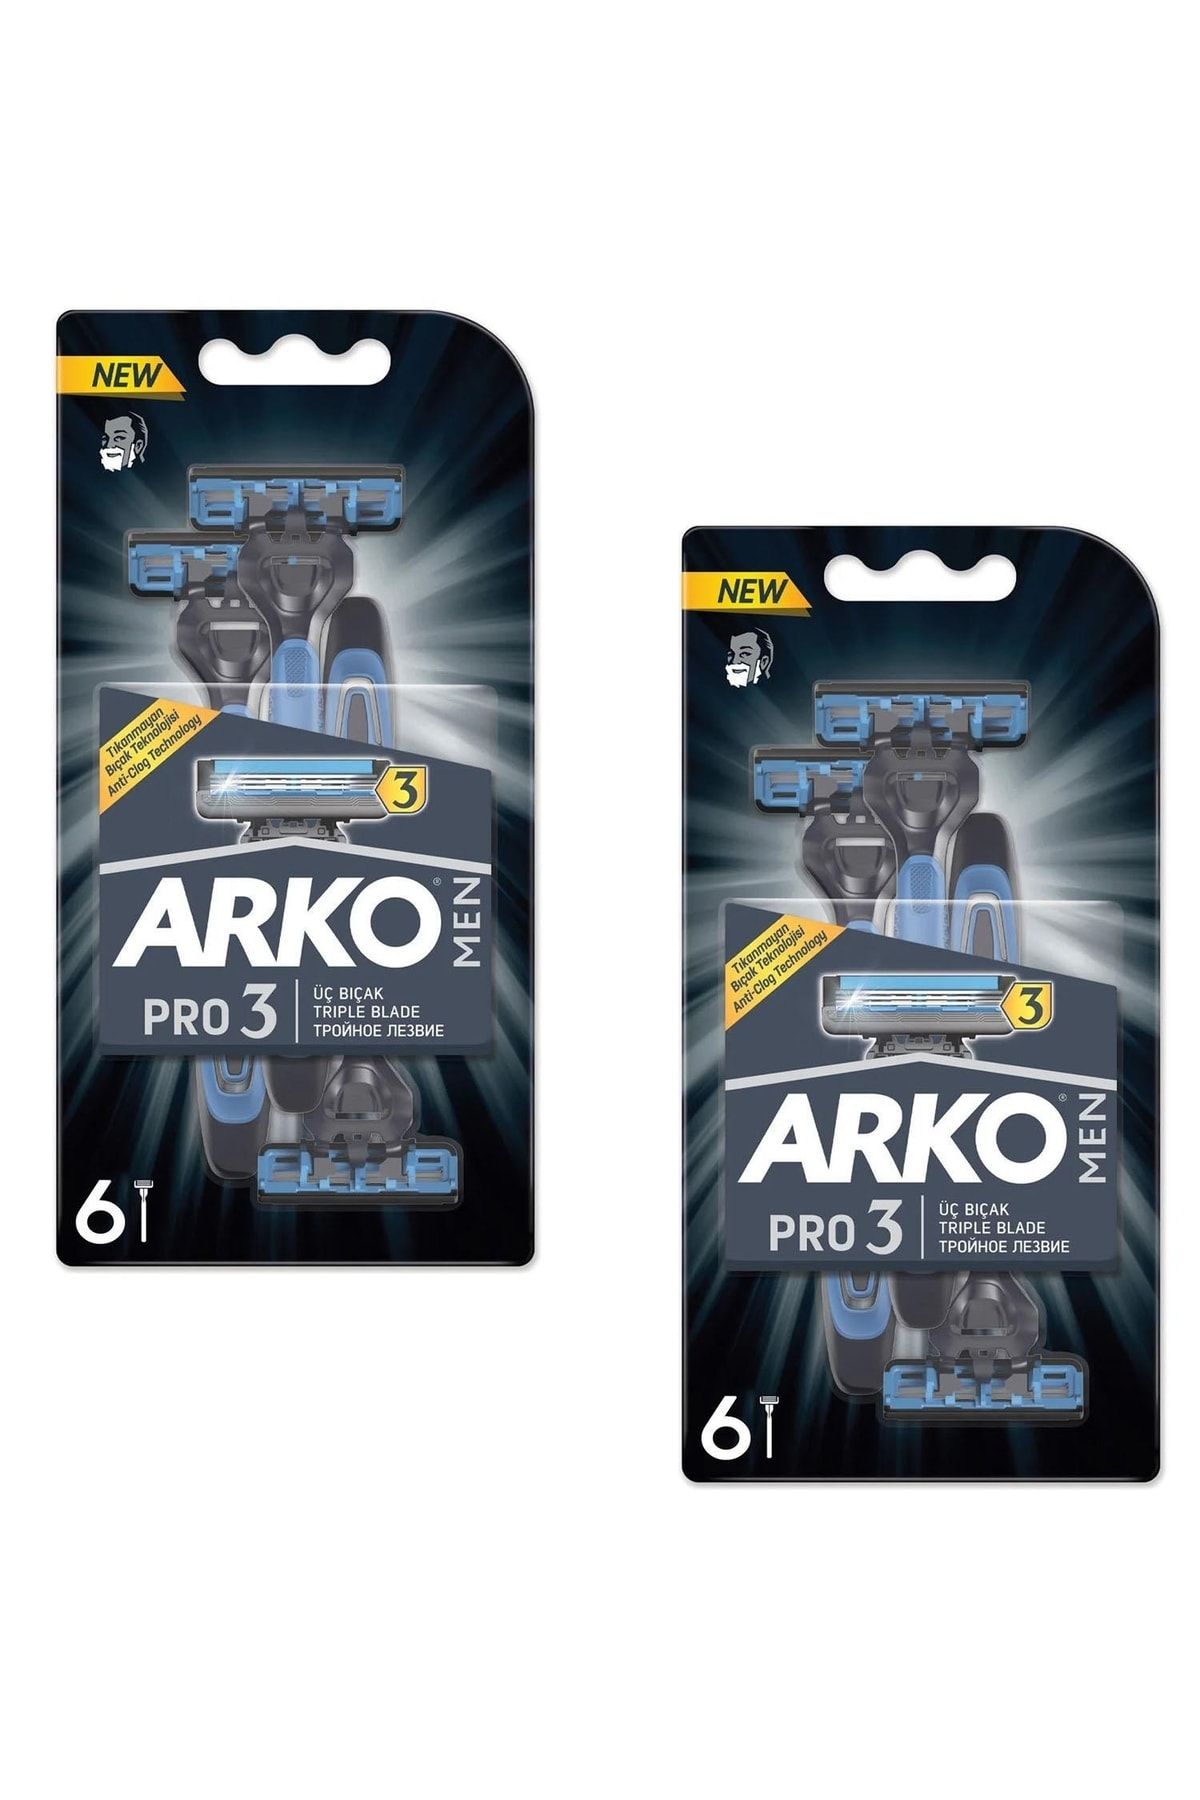 Arko Men Pro 3 Üç Bıçaklı Tıraş Bıçağı 6 Lı 2 Adet